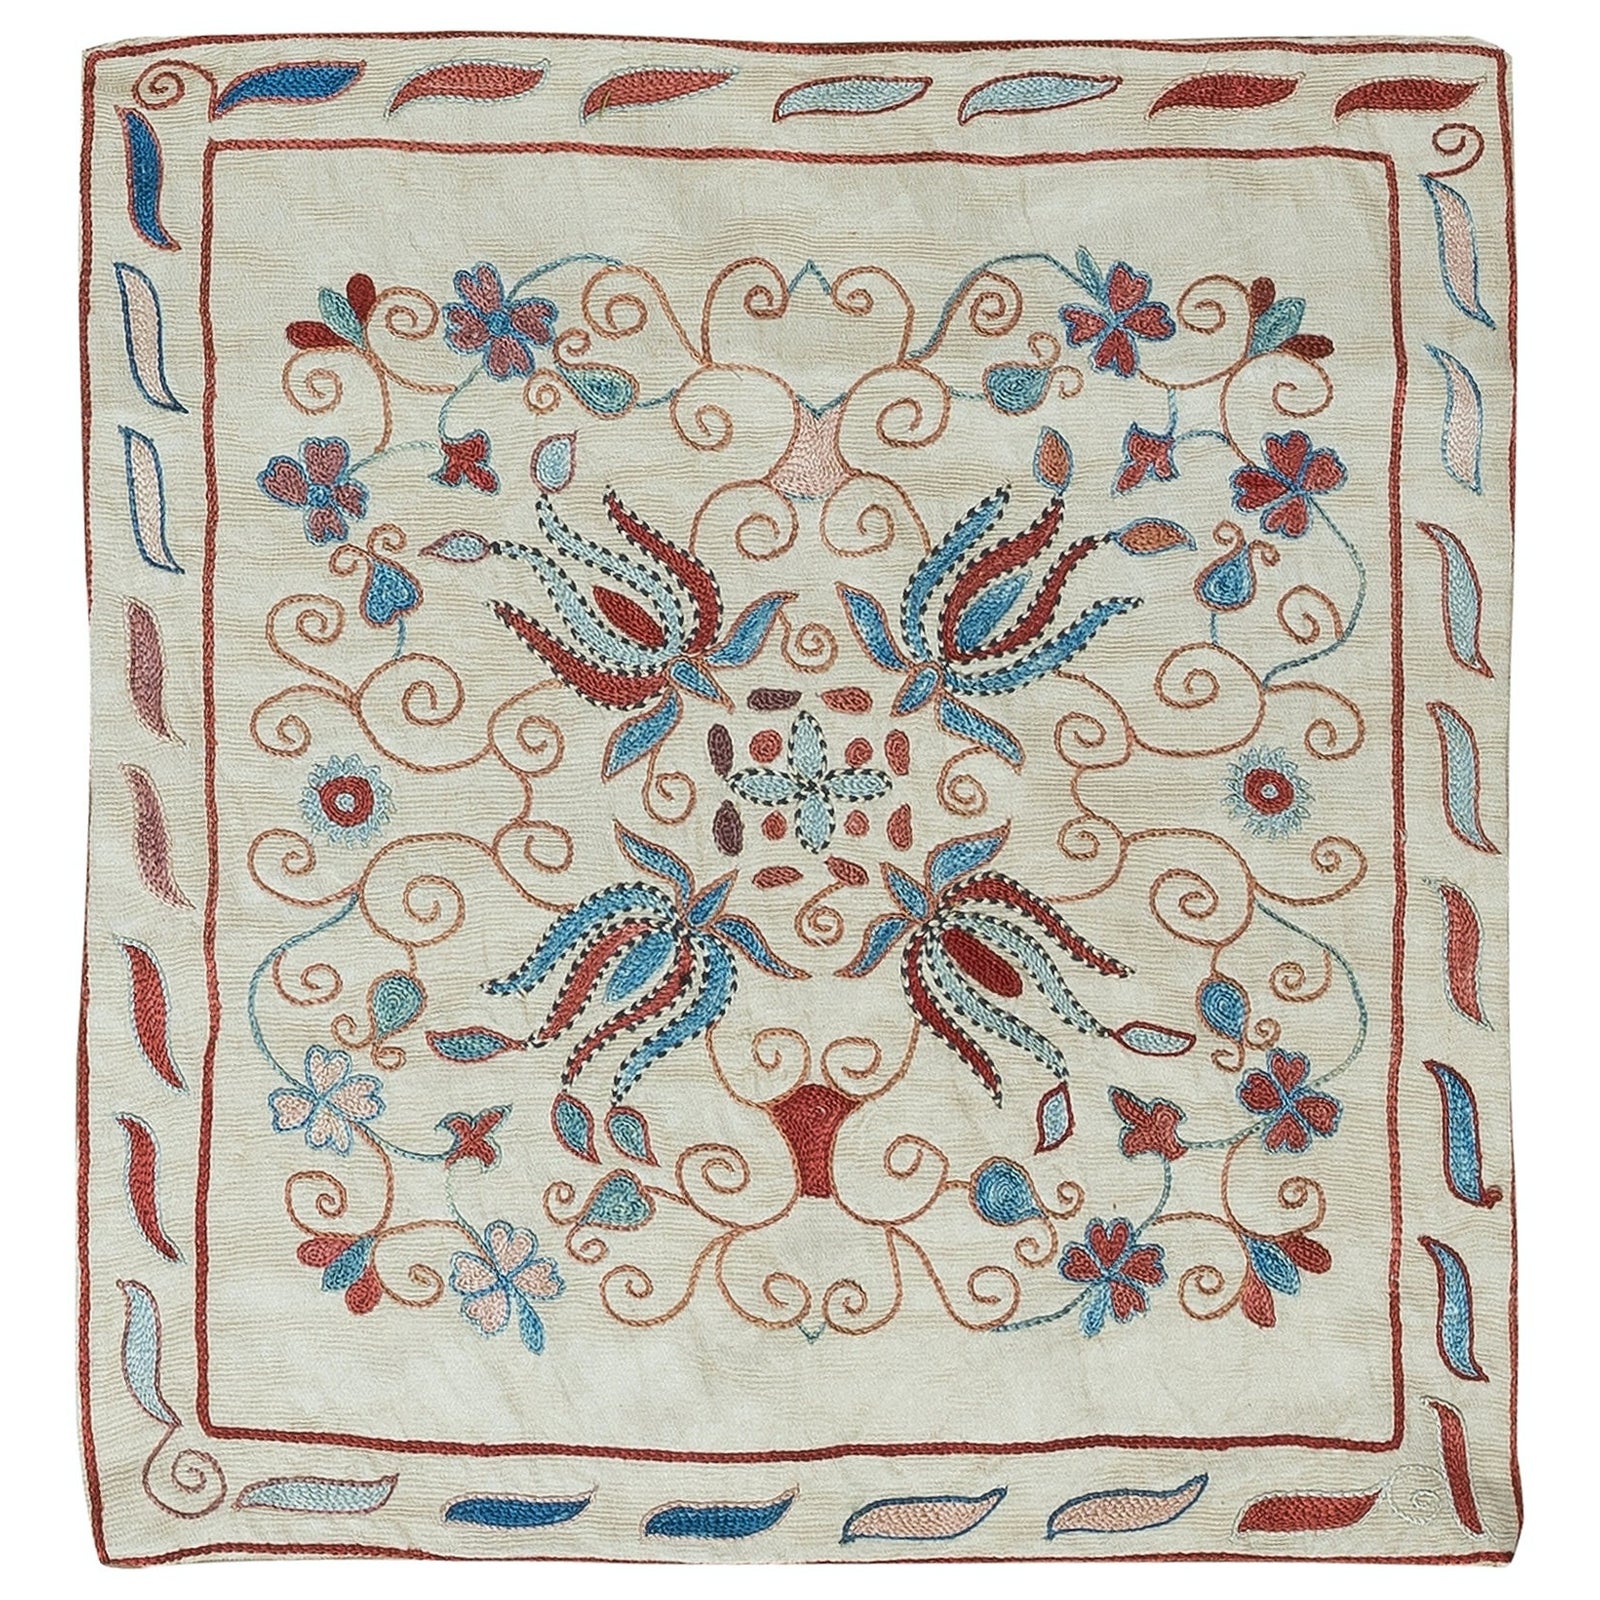 Asian Embroidered Suzani Textile Throw Pillow, 100% Silk Cushion Cover